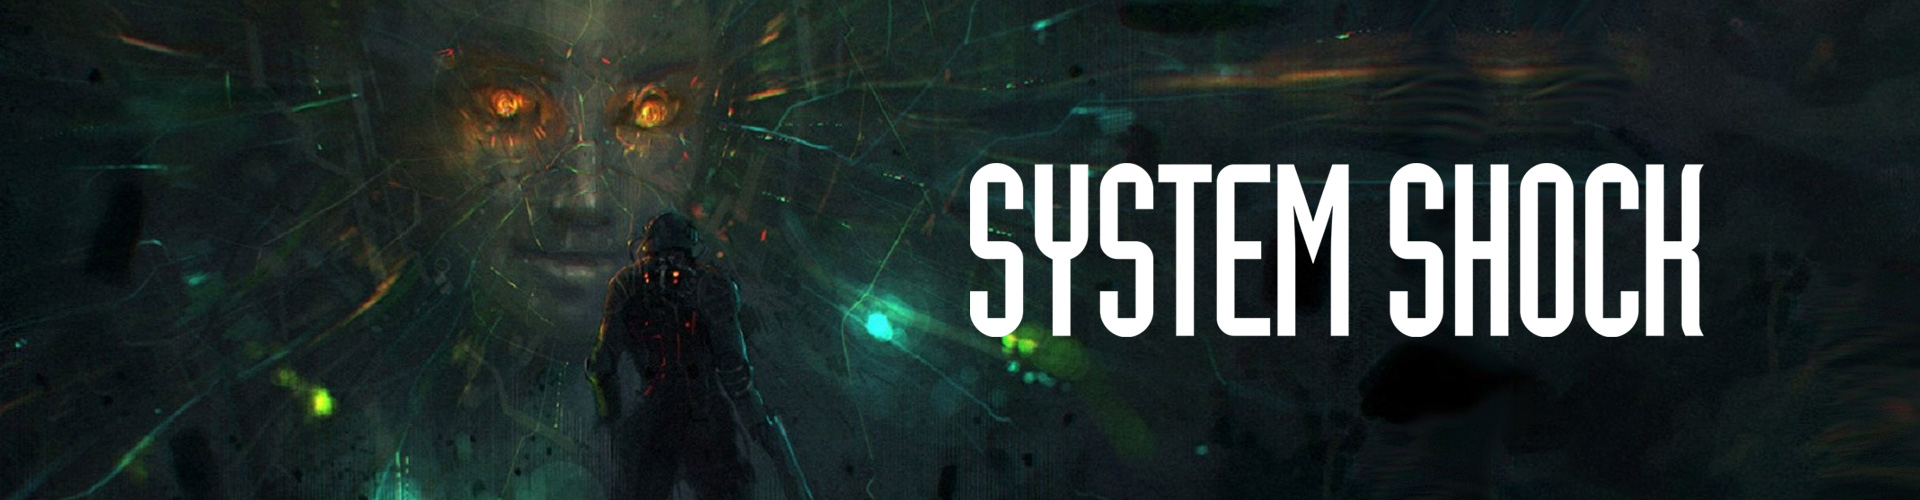 System Shock: Ein Sci-Fi-Horror-Ego-Shooter